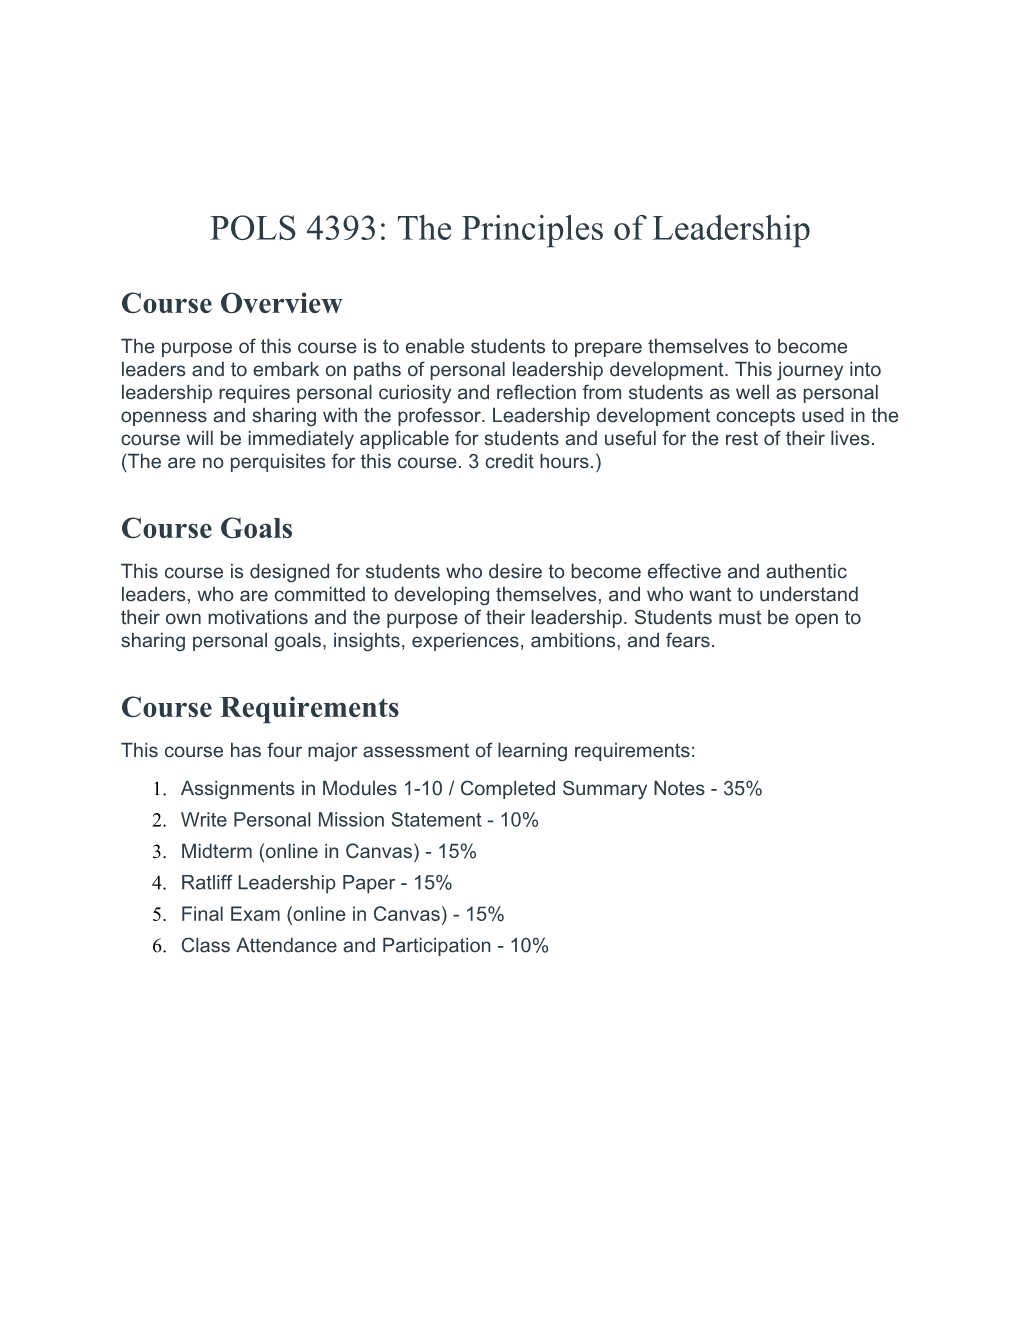 POLS 4393: the Principles of Leadership